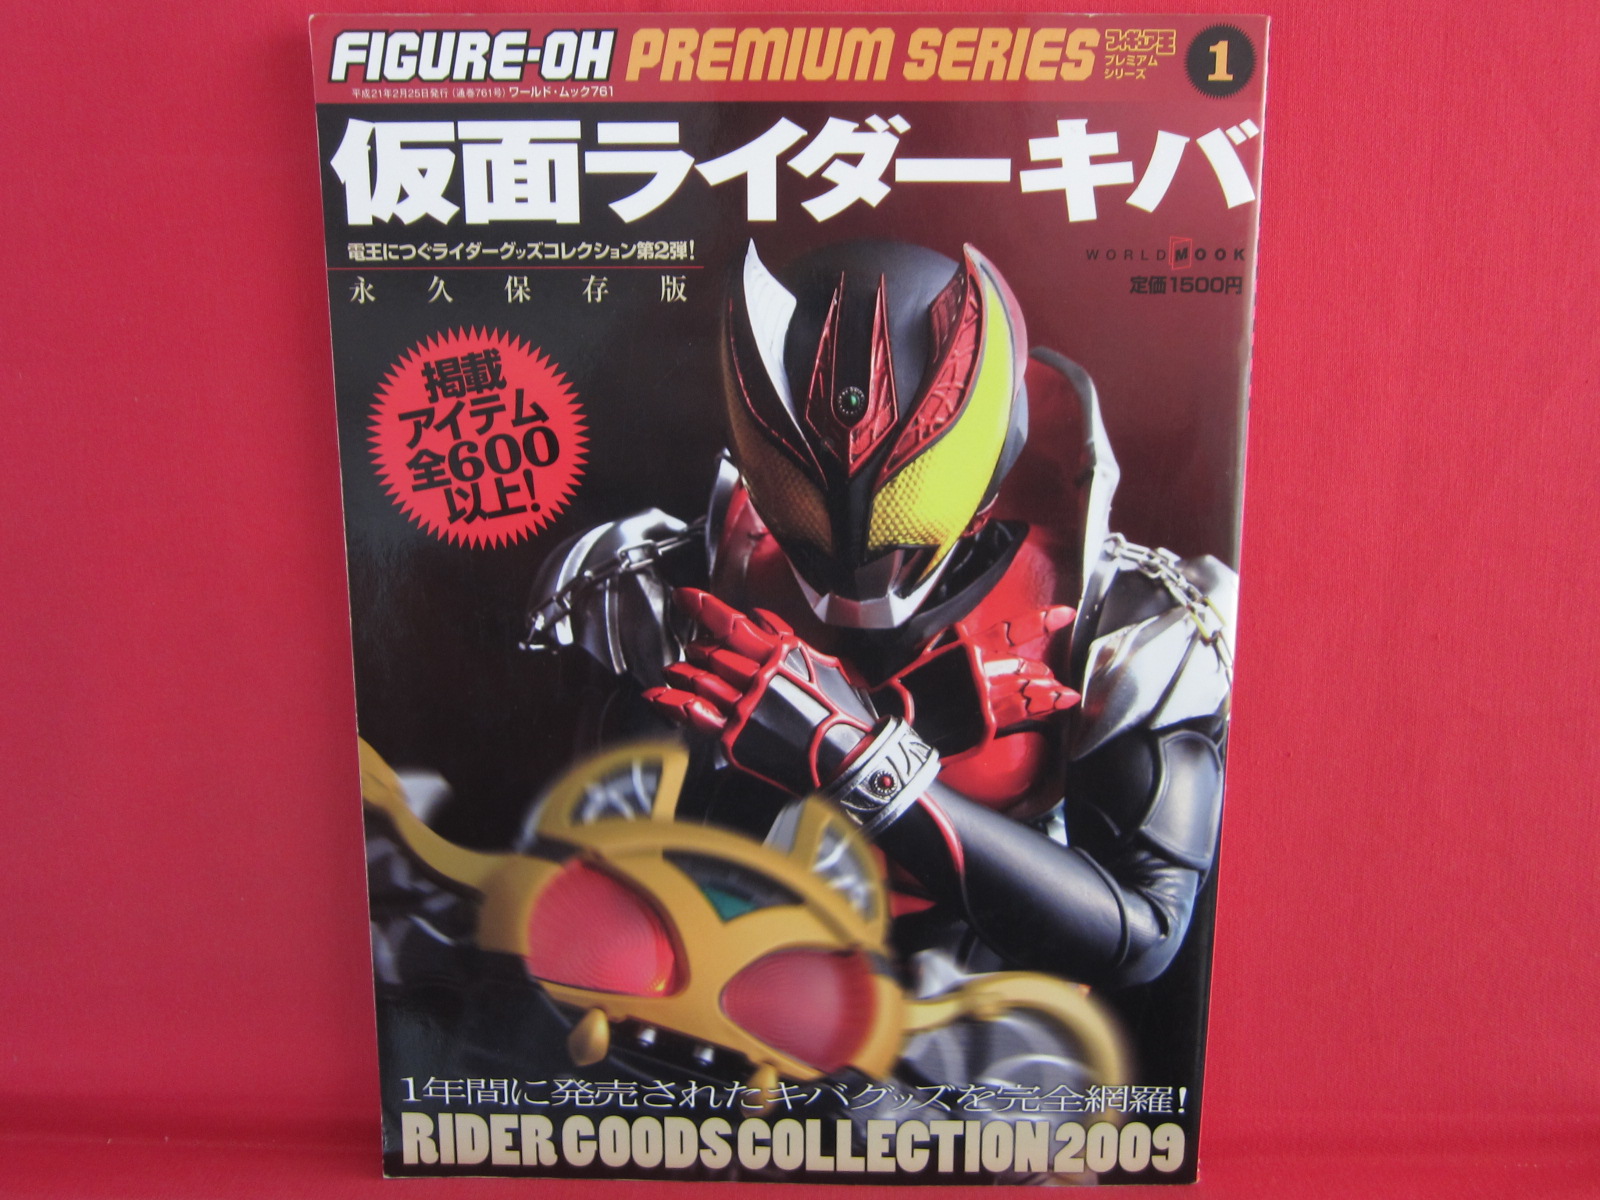 Rider Goods Collection 09 Kamen Rider Kiba Collection Book Anime Art Book Online Com